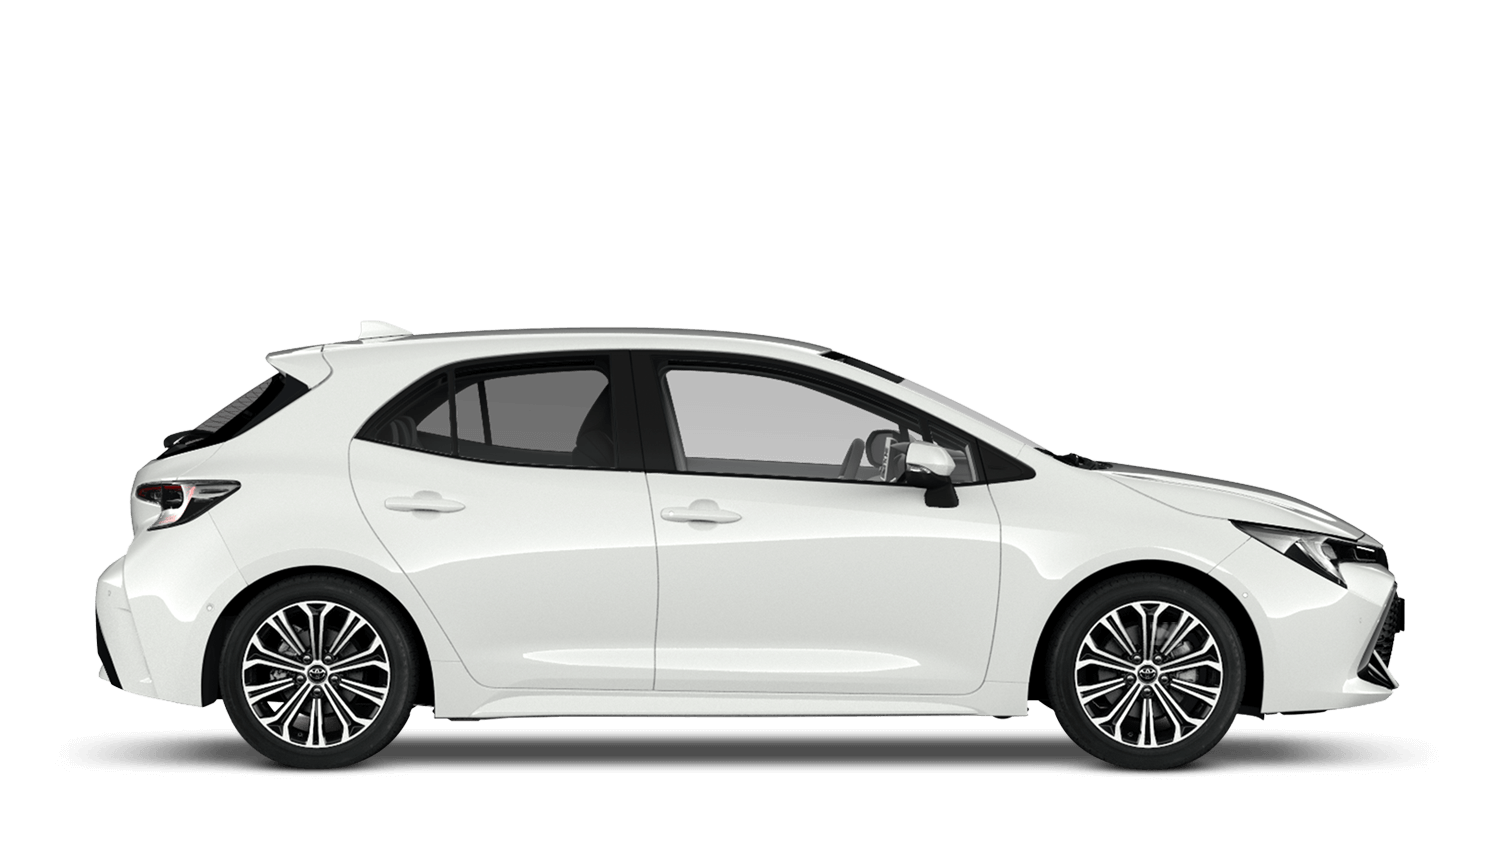 New Toyota Corolla Hatchback Design Finance Available Toyota